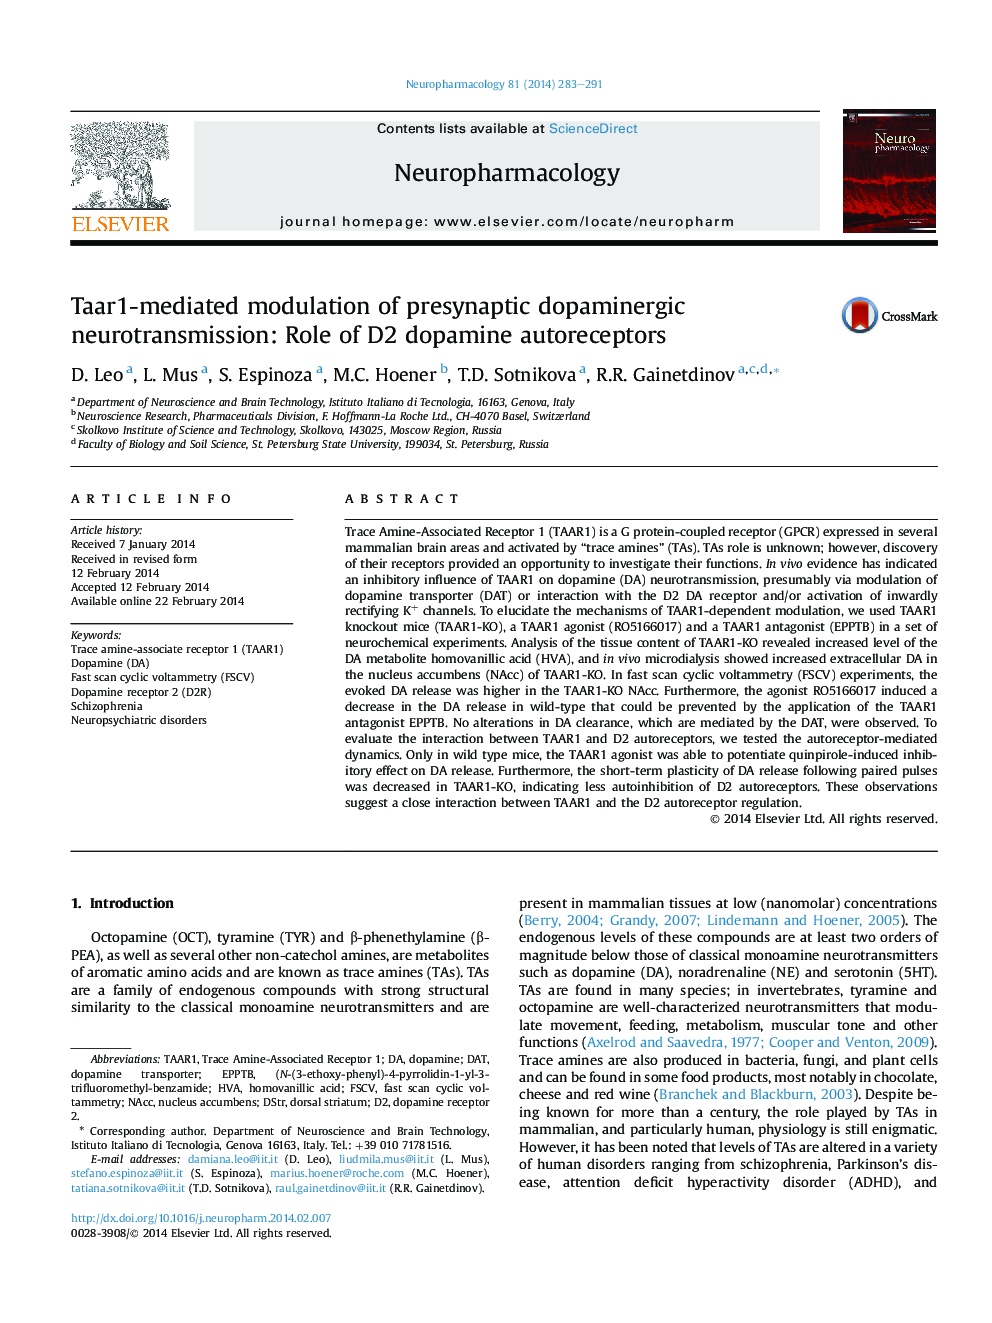 Taar1-mediated modulation of presynaptic dopaminergic neurotransmission: Role of D2 dopamine autoreceptors